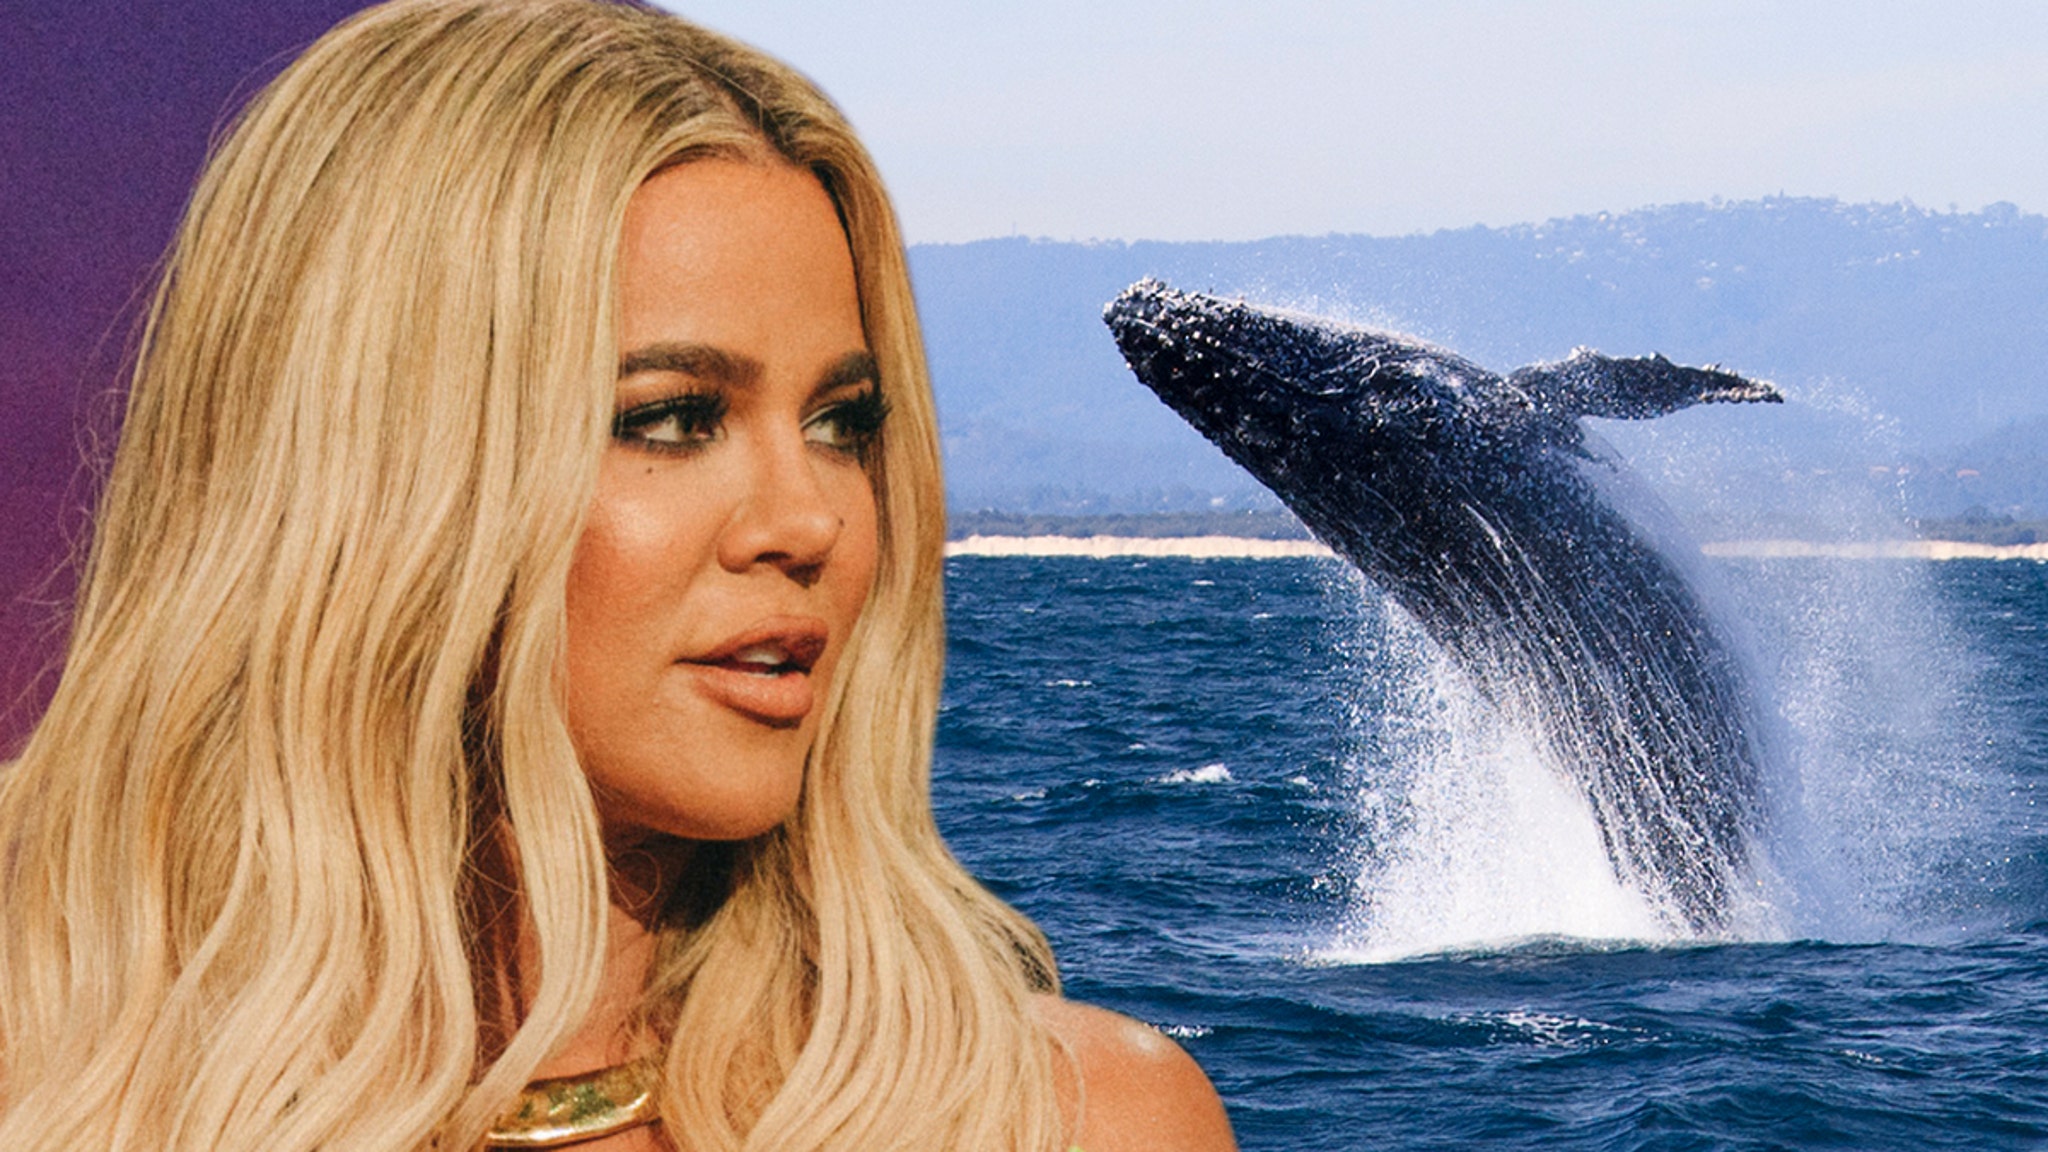 Khloe Kardashian Reveals She Has Phobia of Whales